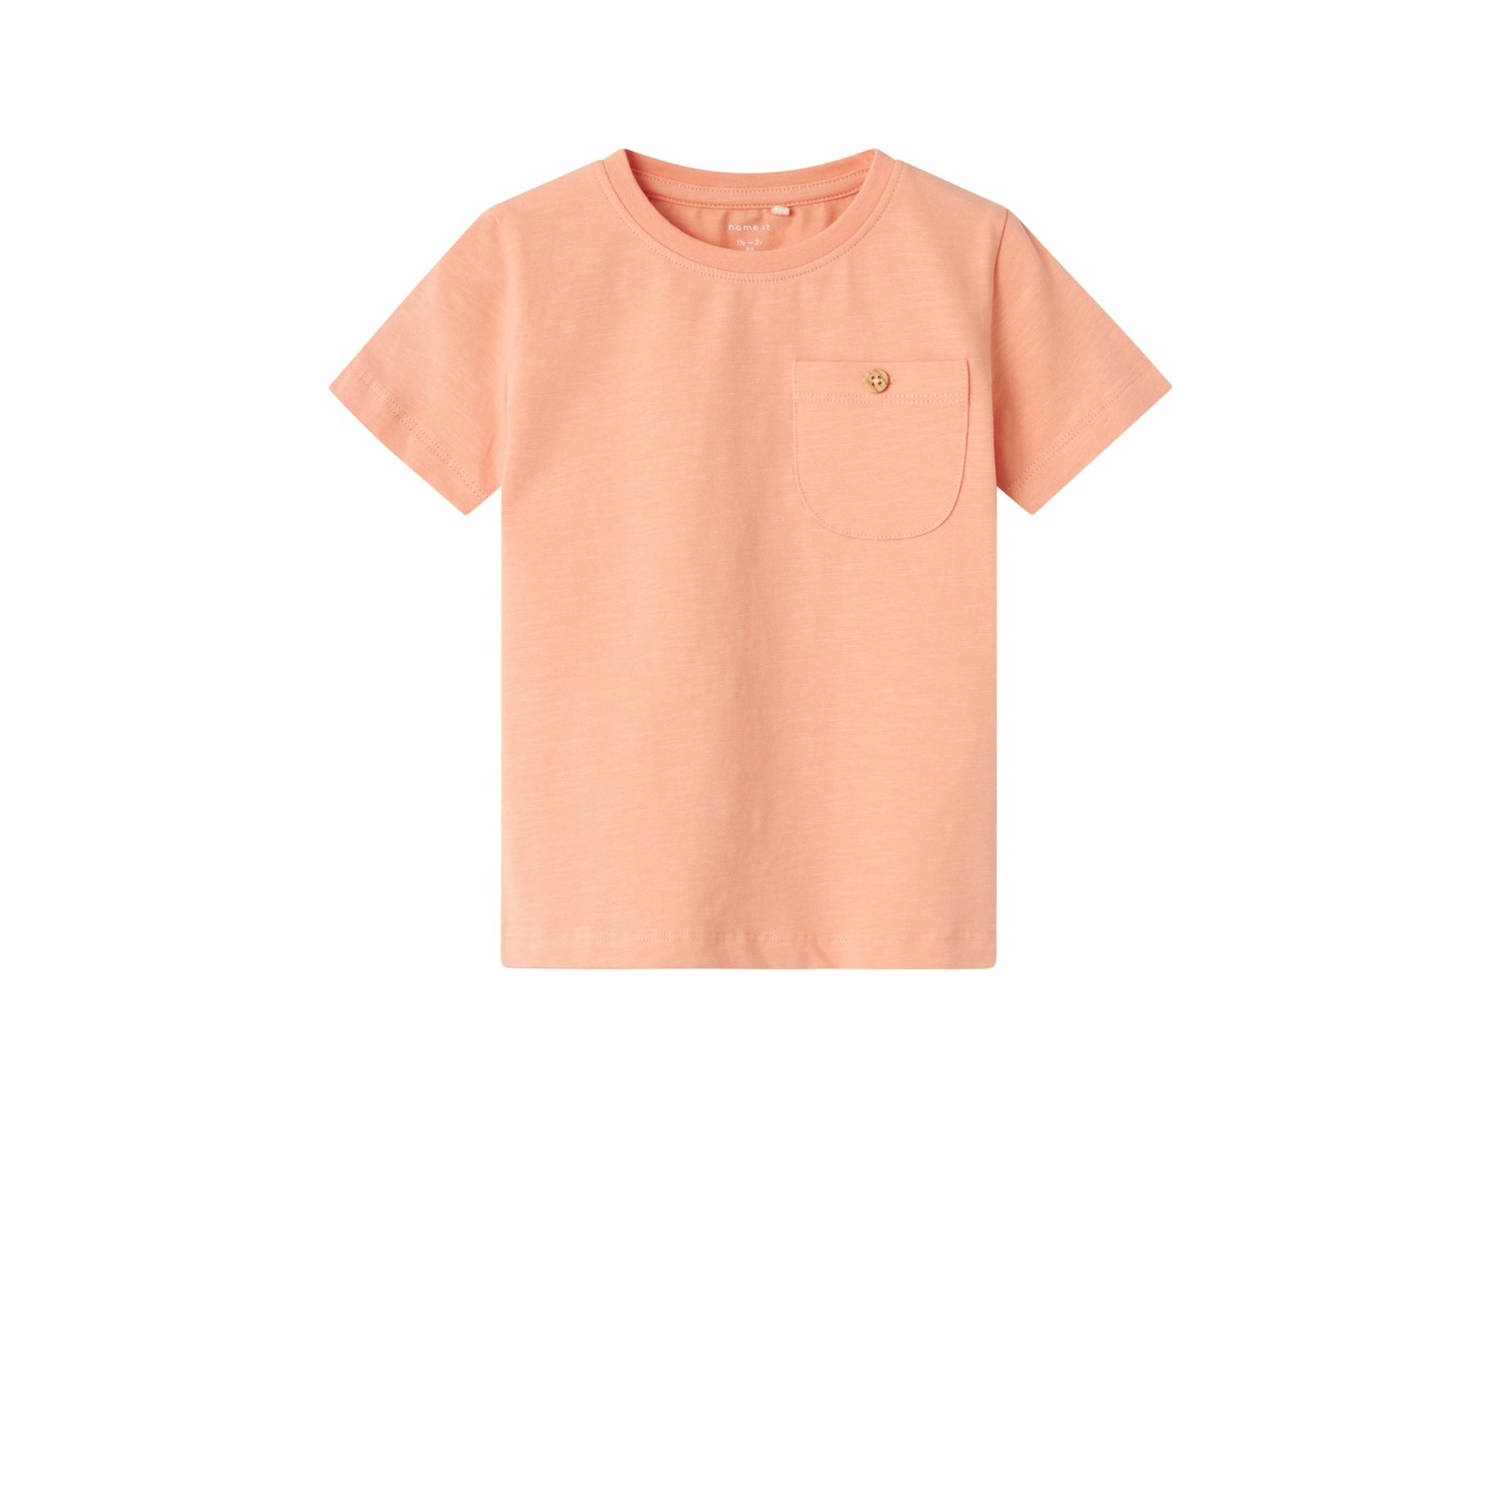 NAME IT MINI T-shirt NMMHUGO oranjeroze